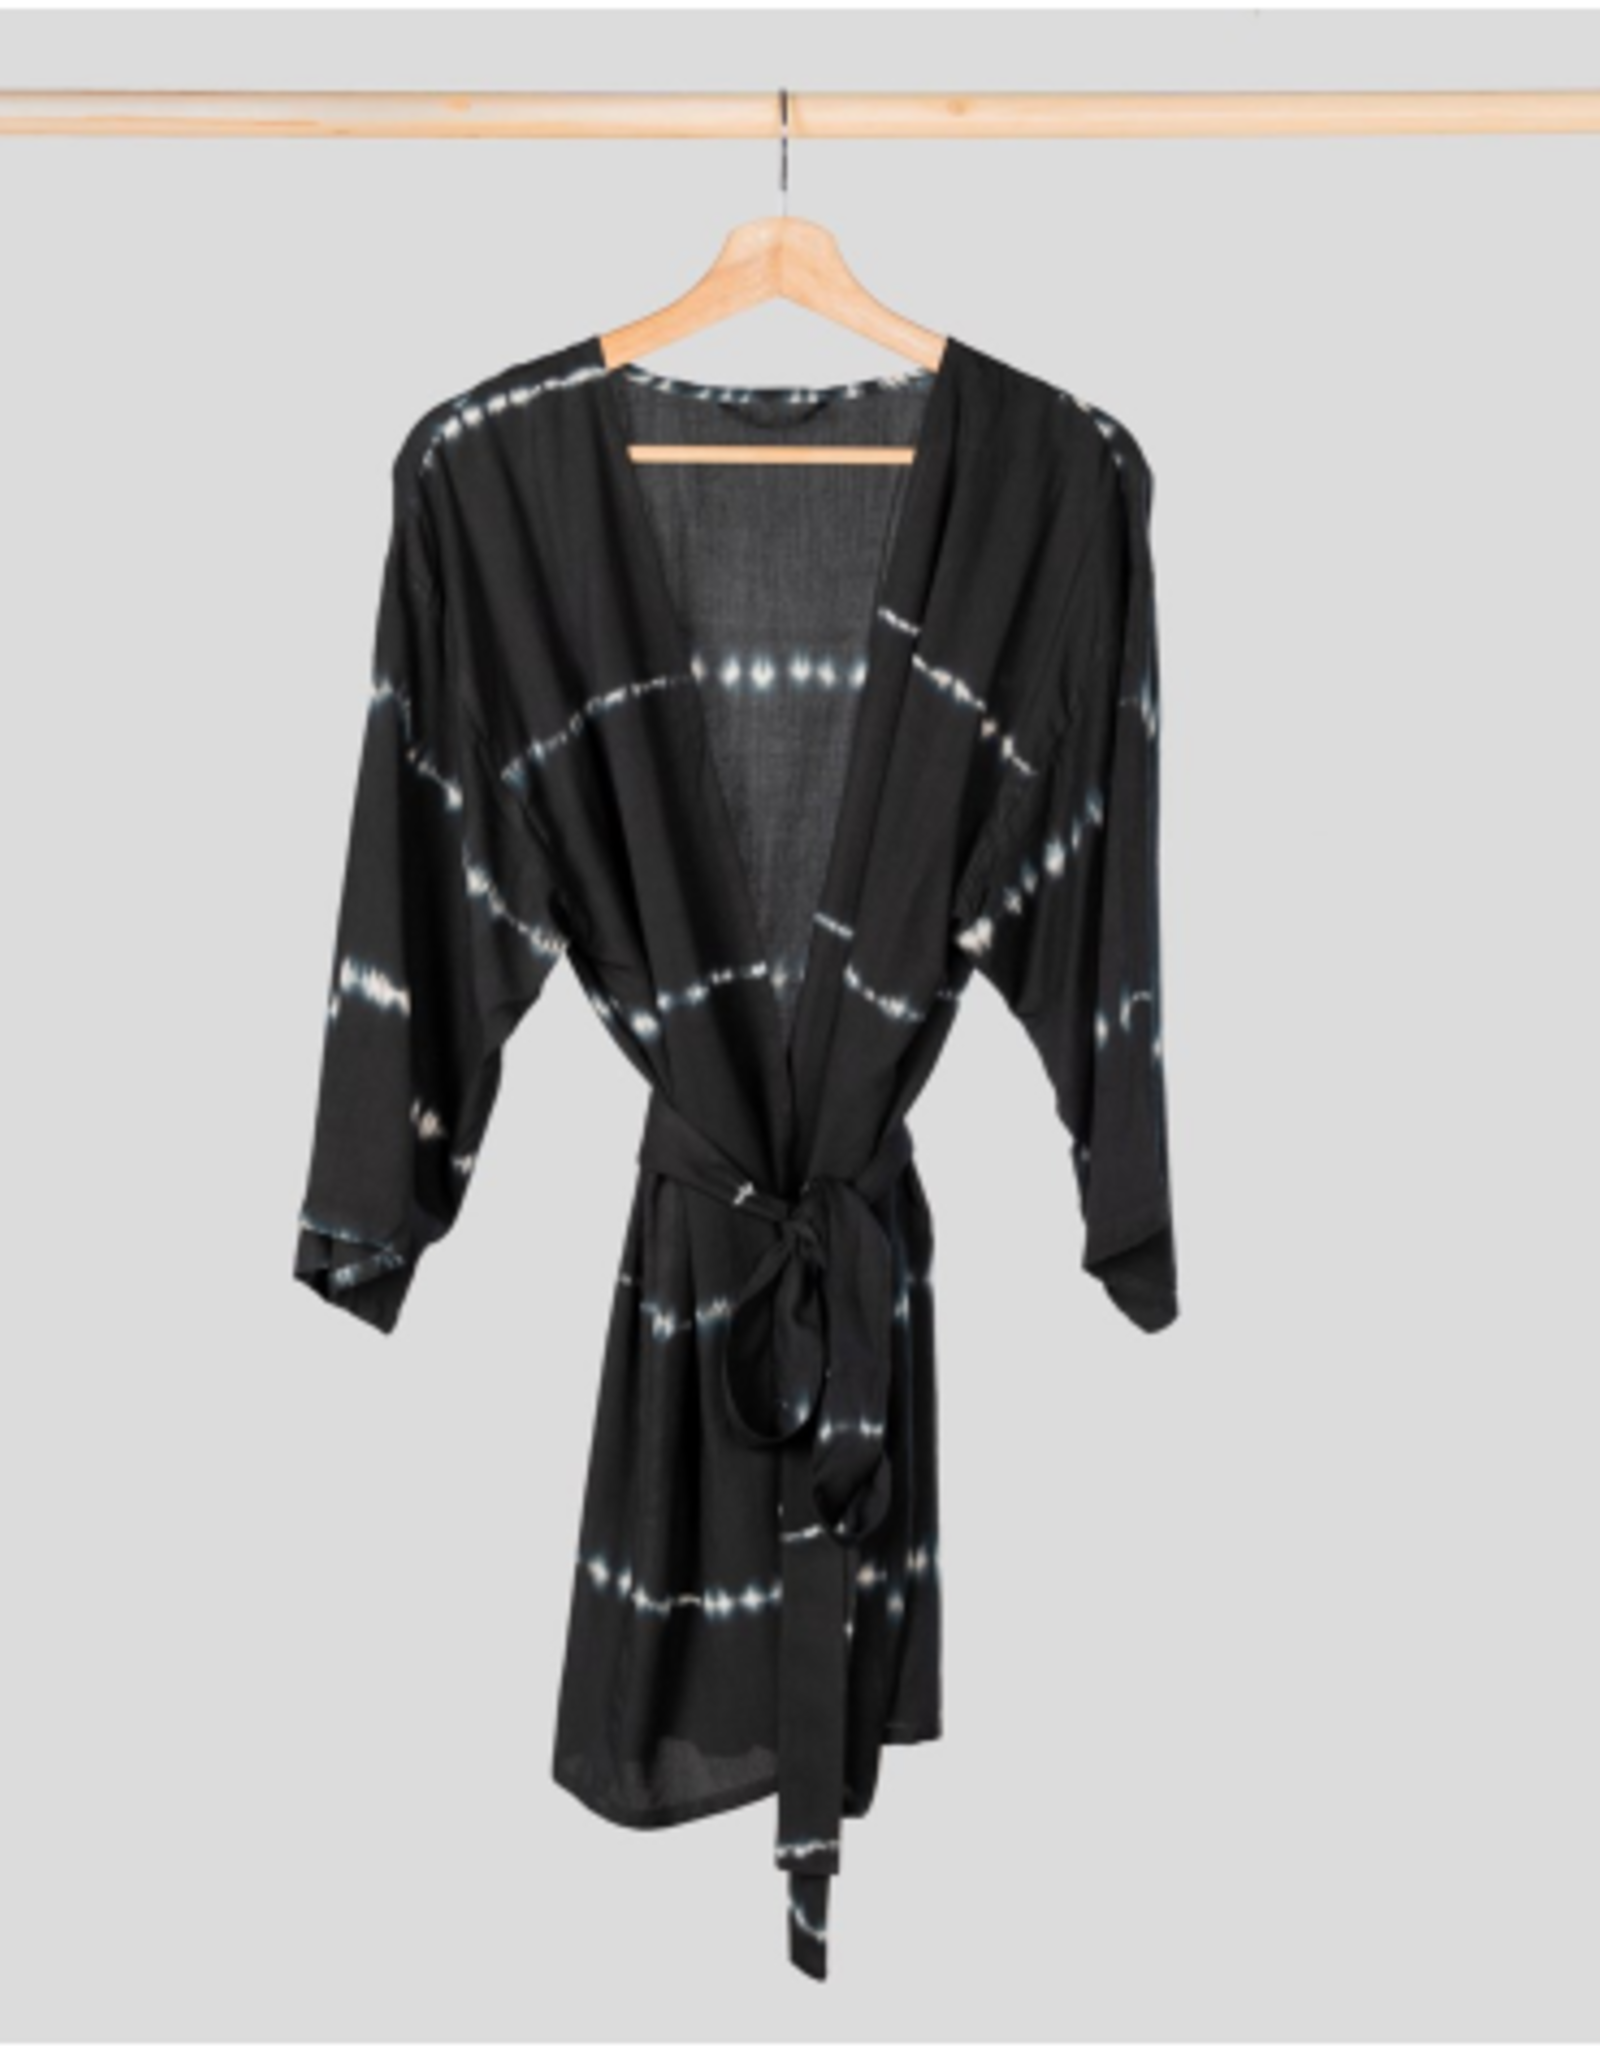 Pokoloko Kimono SALE One Size Black Tie Dye